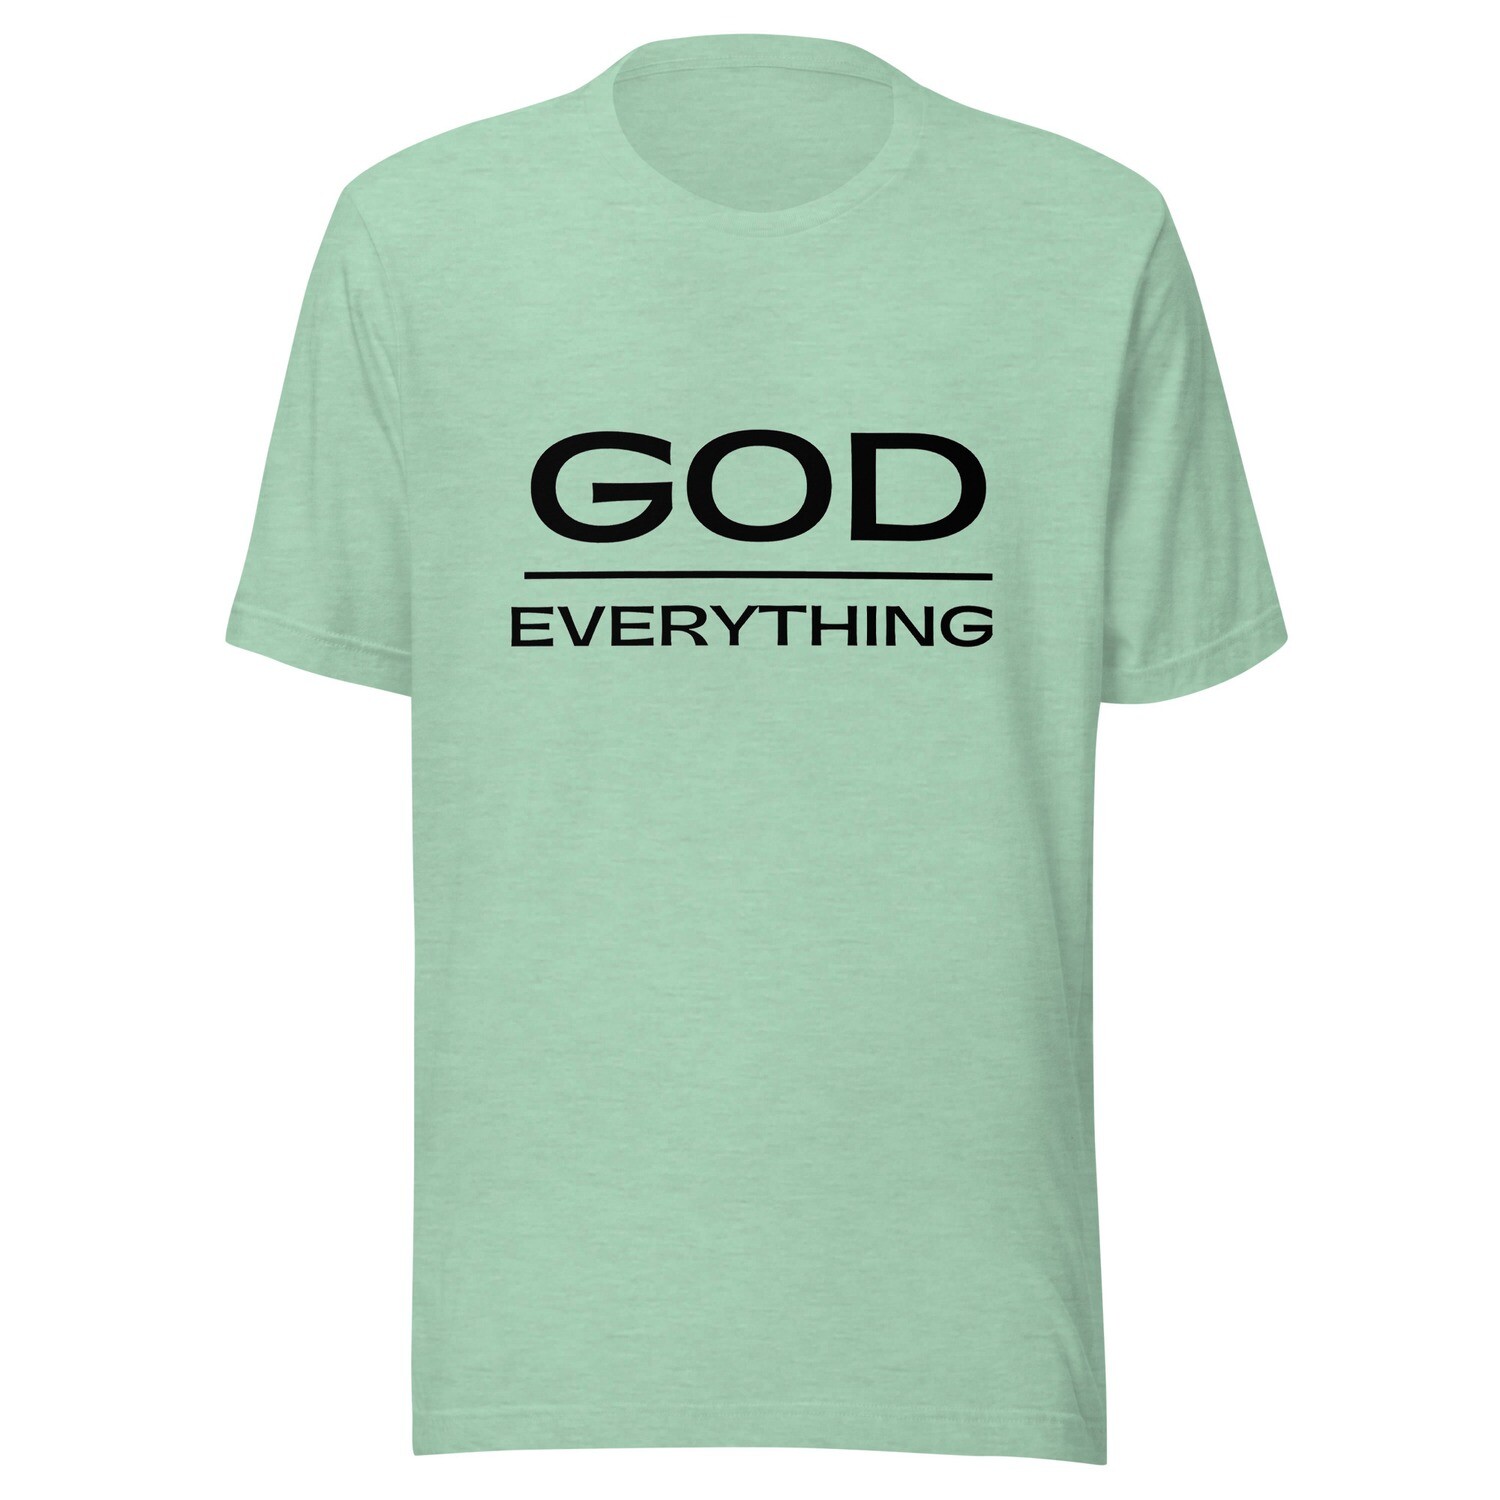 'God Over Everything' Adult Unisex Tee